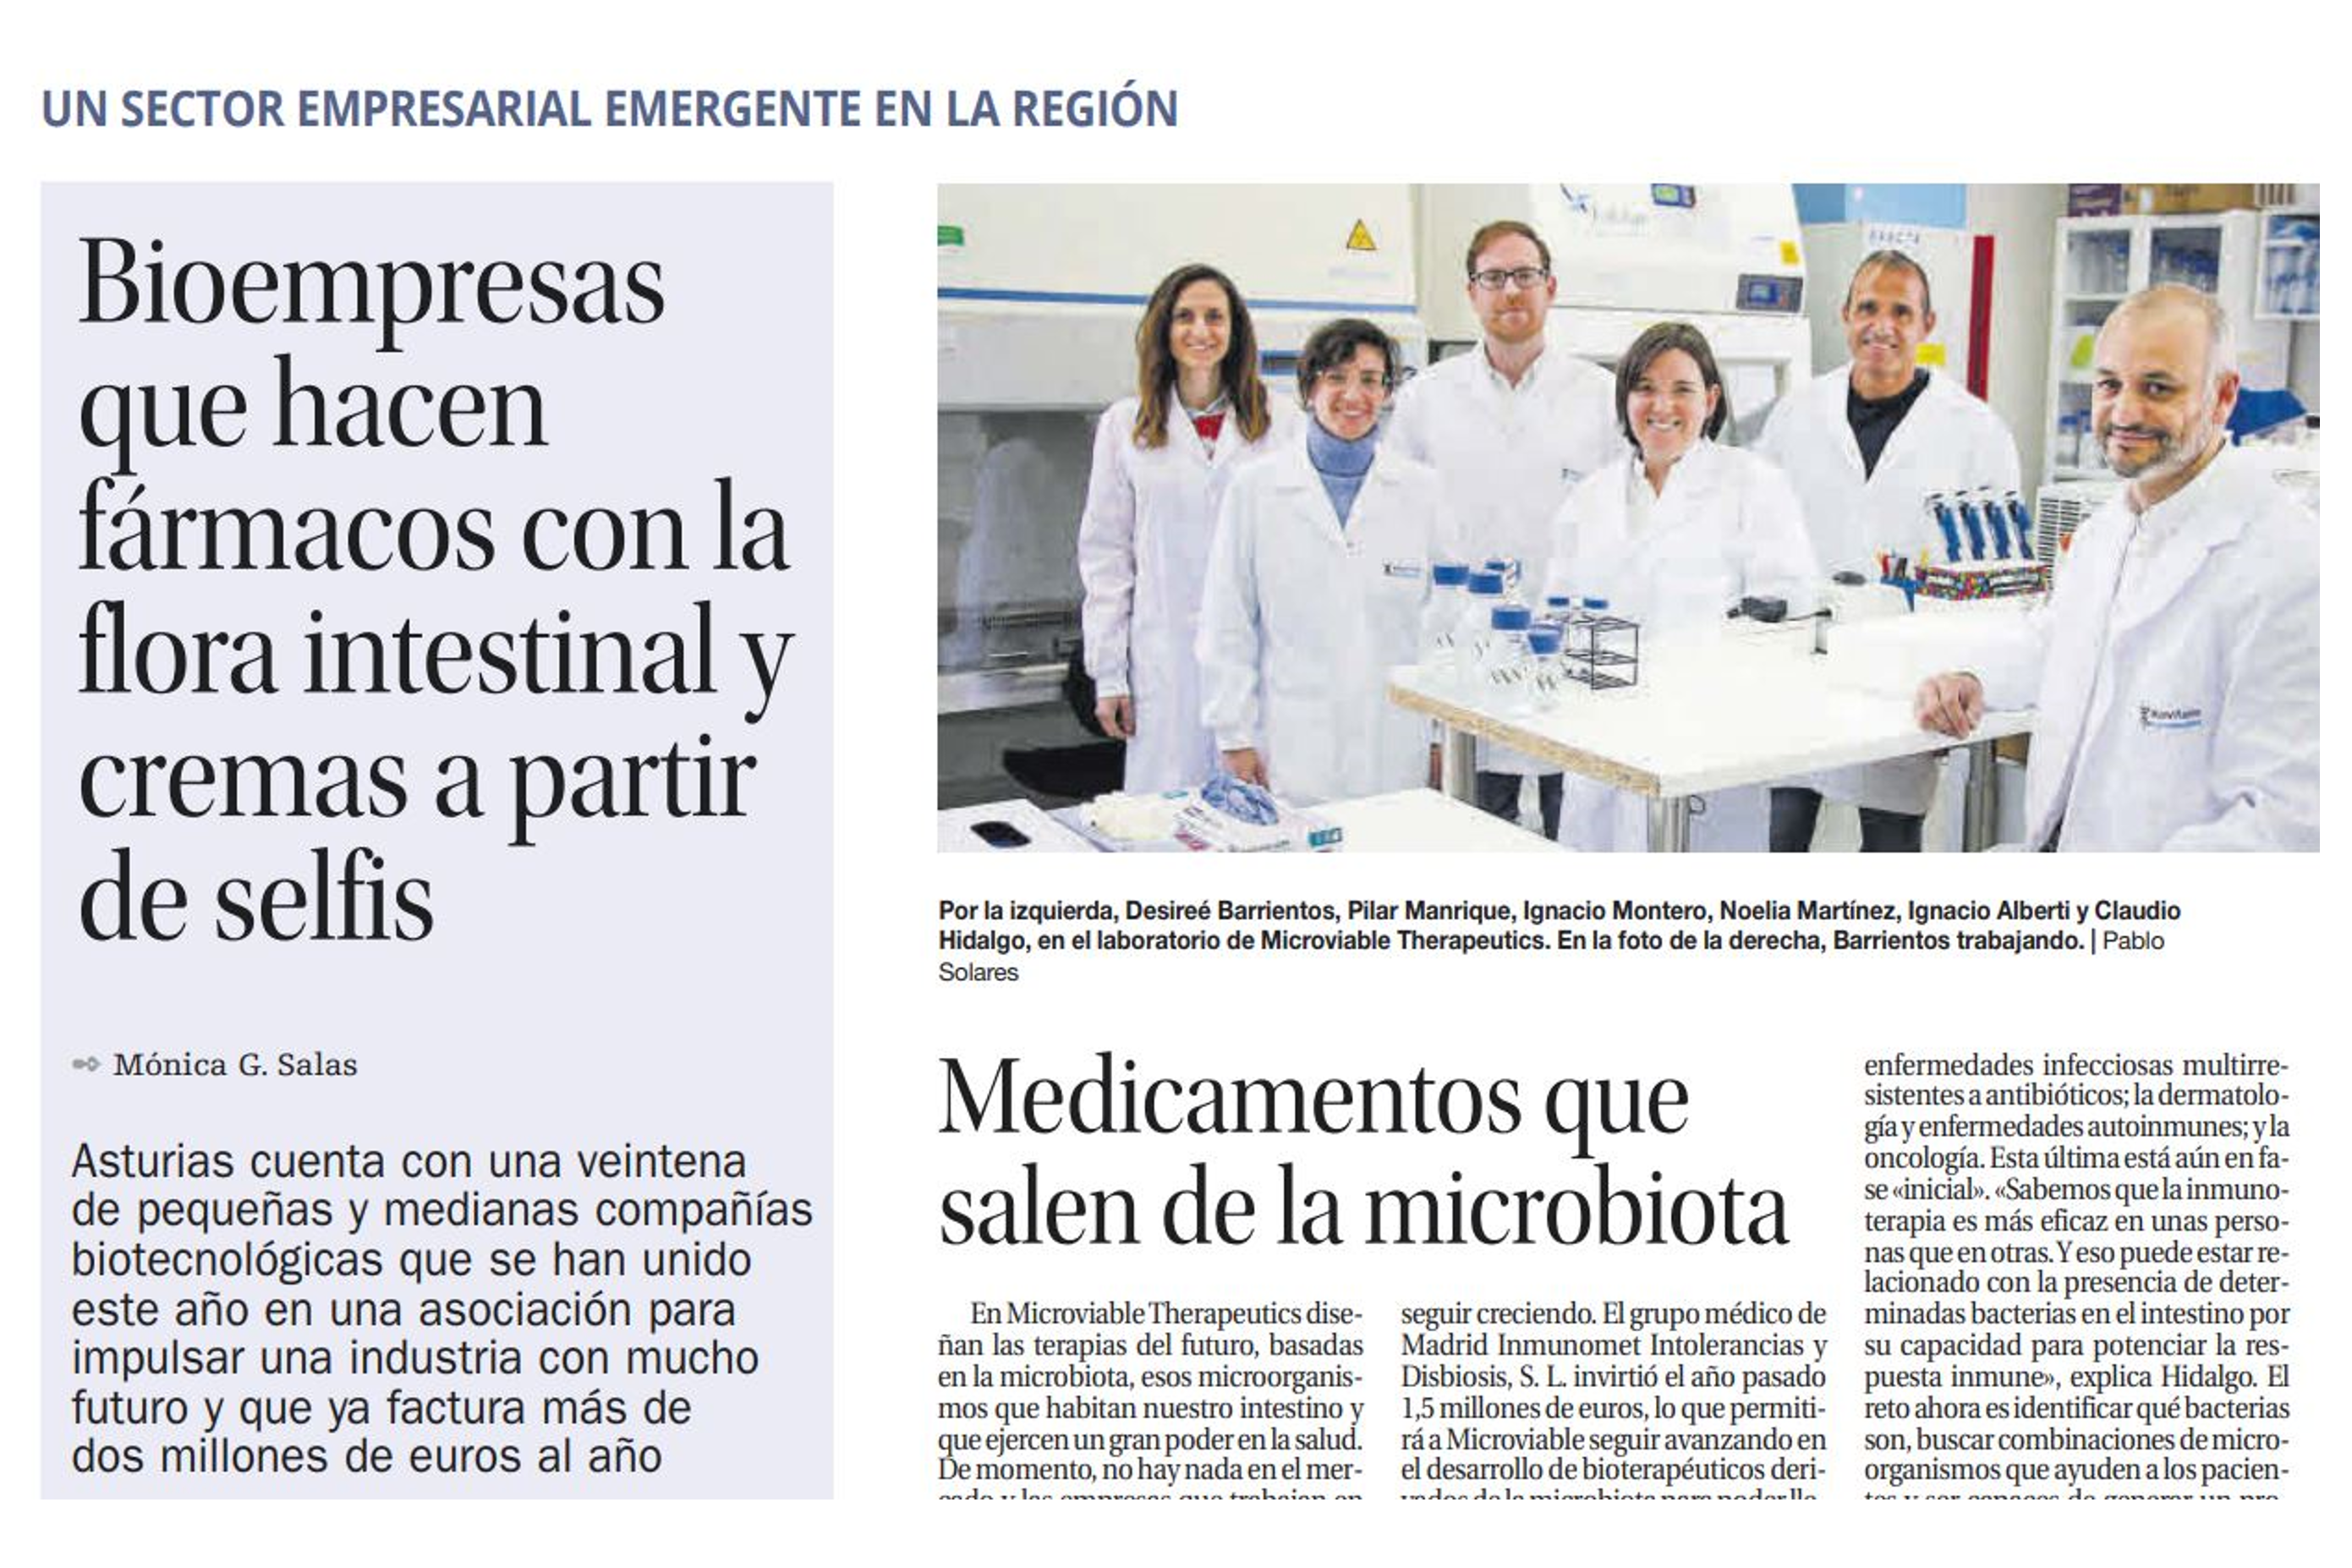 La prensa señala a Microviable como empresa pionera en terapias basadas en microbiota